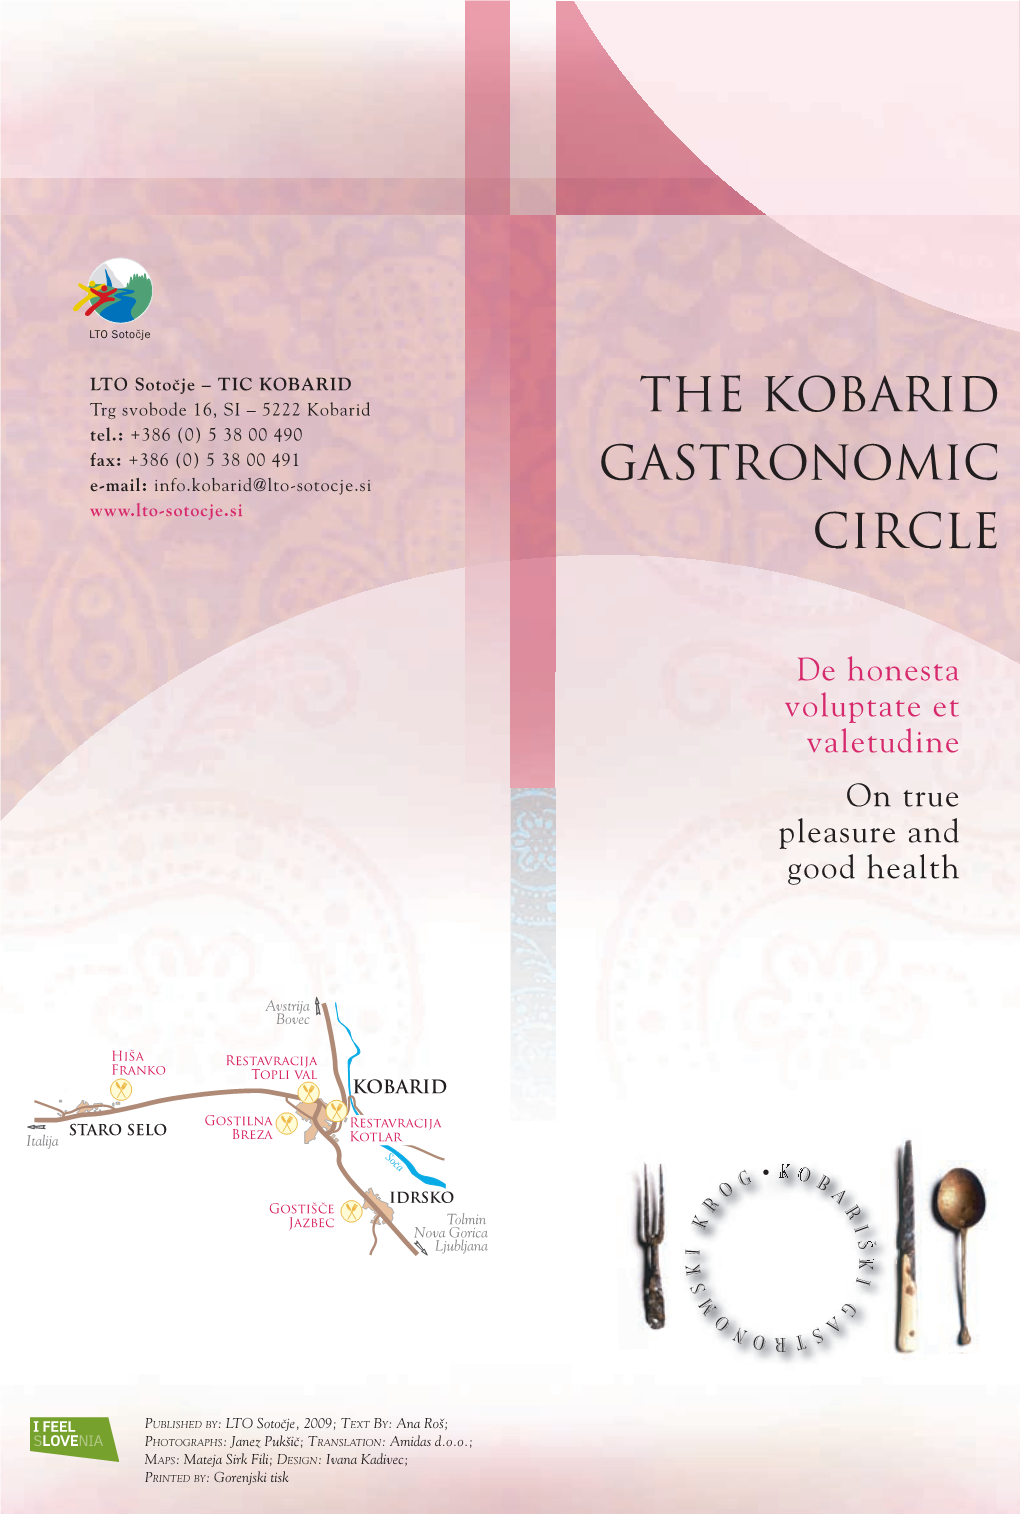 The Kobarid Gastronomic Circle